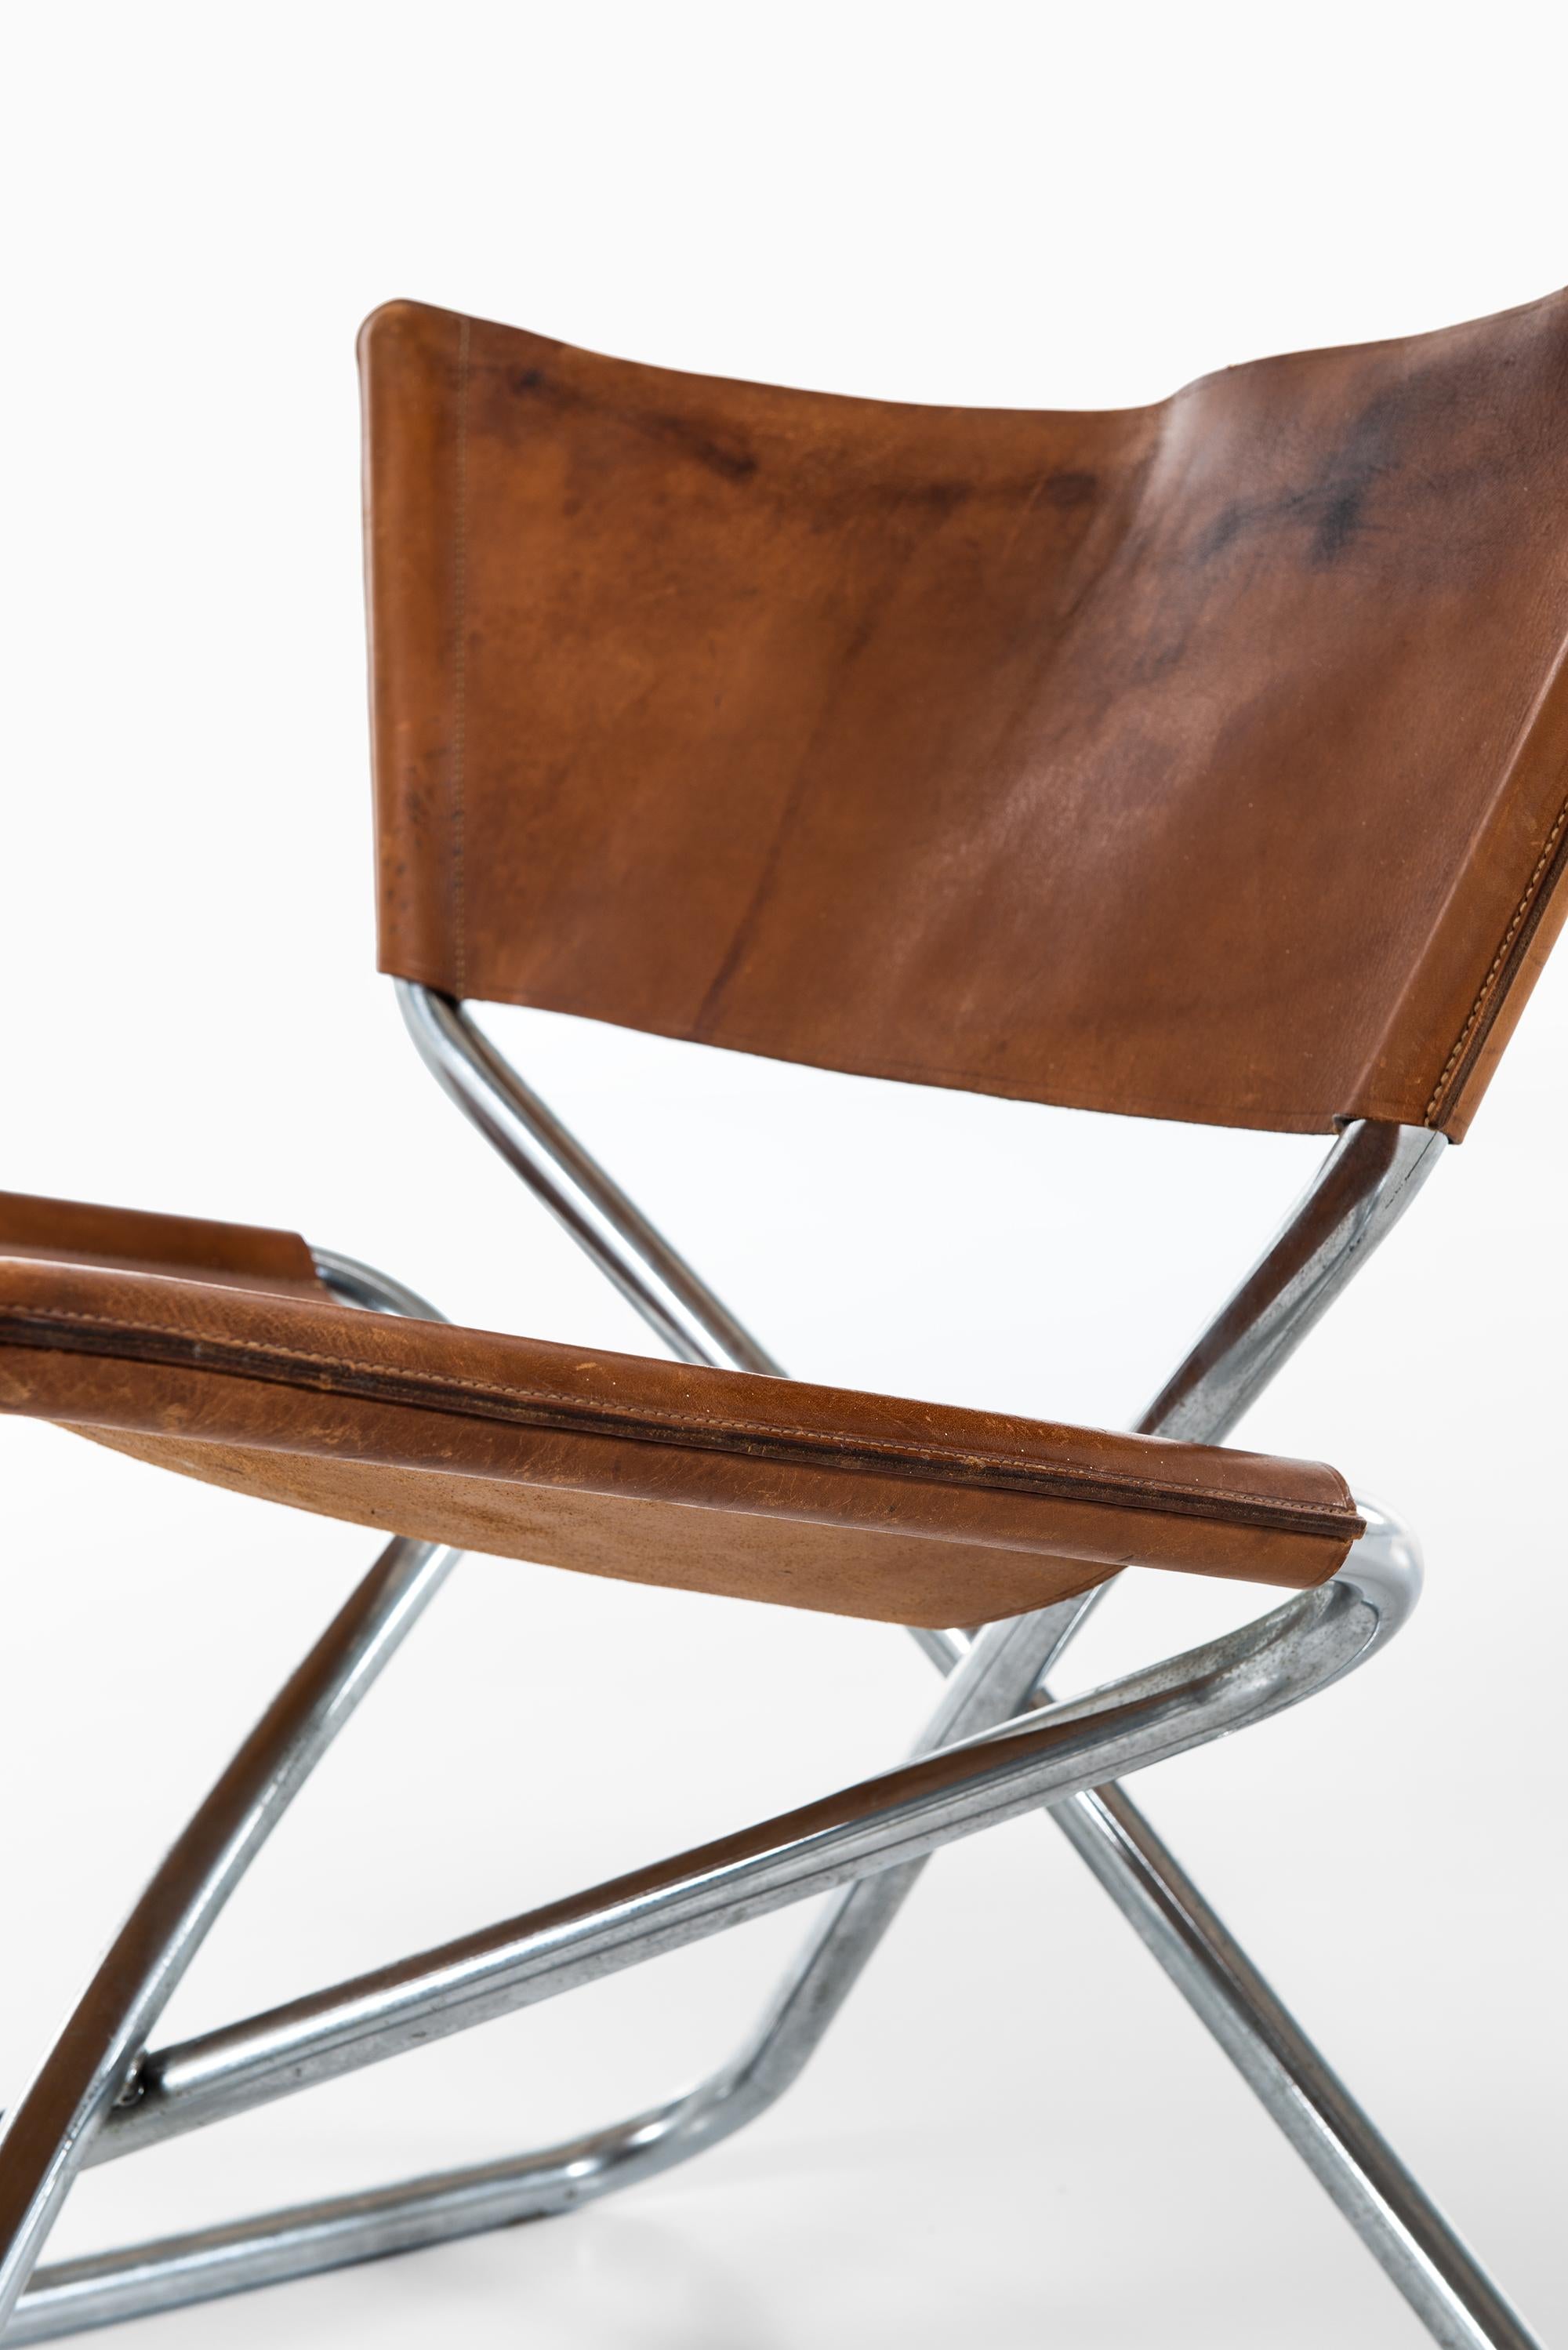 Rare pair of Z easy chairs designed by Erik Magnussen. Produced by Torben Ørskov in Denmark.